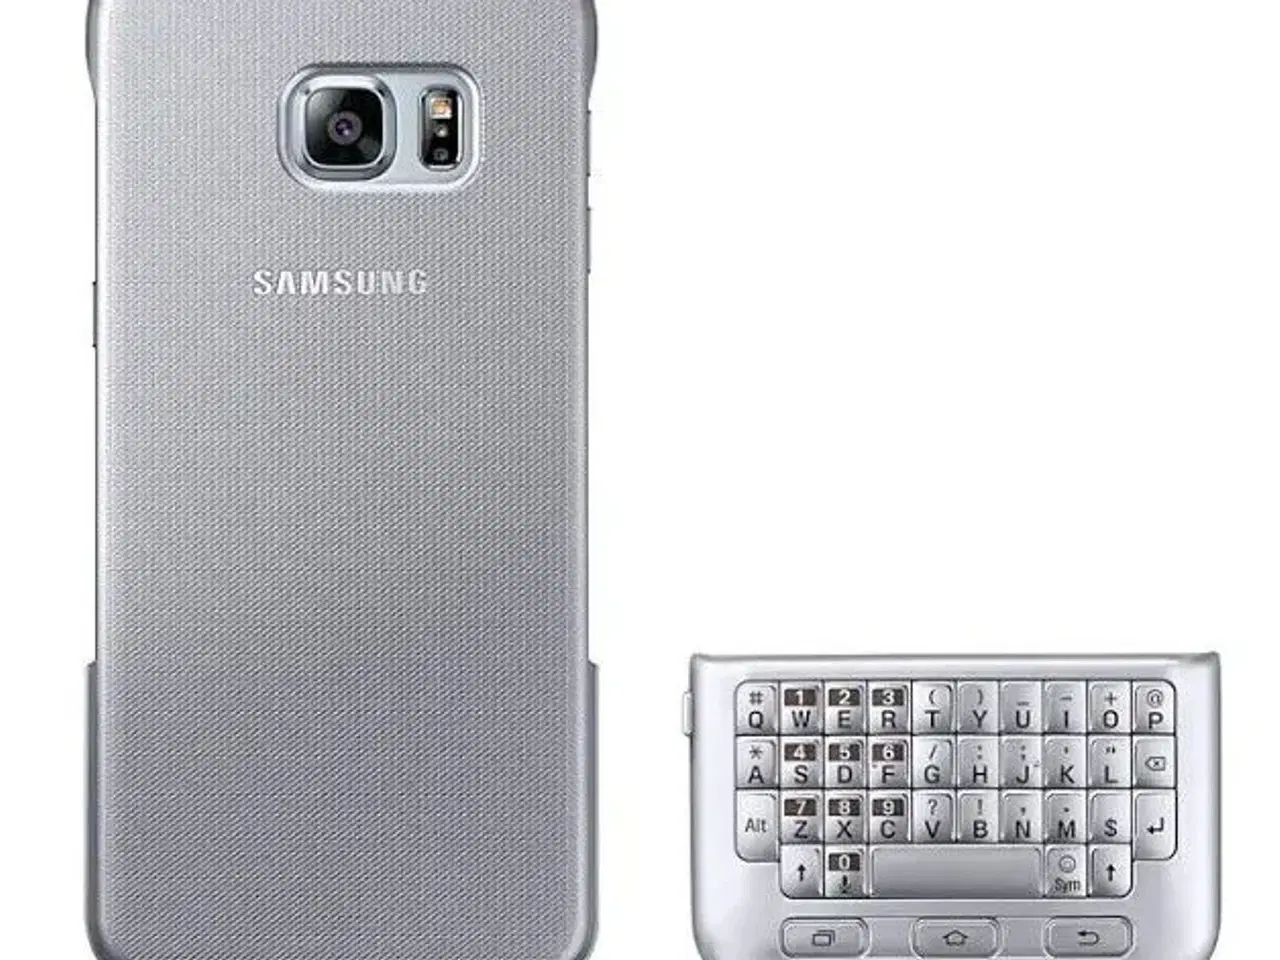 Billede 4 - Chatboard til Samsung Galaxy S6 edge+